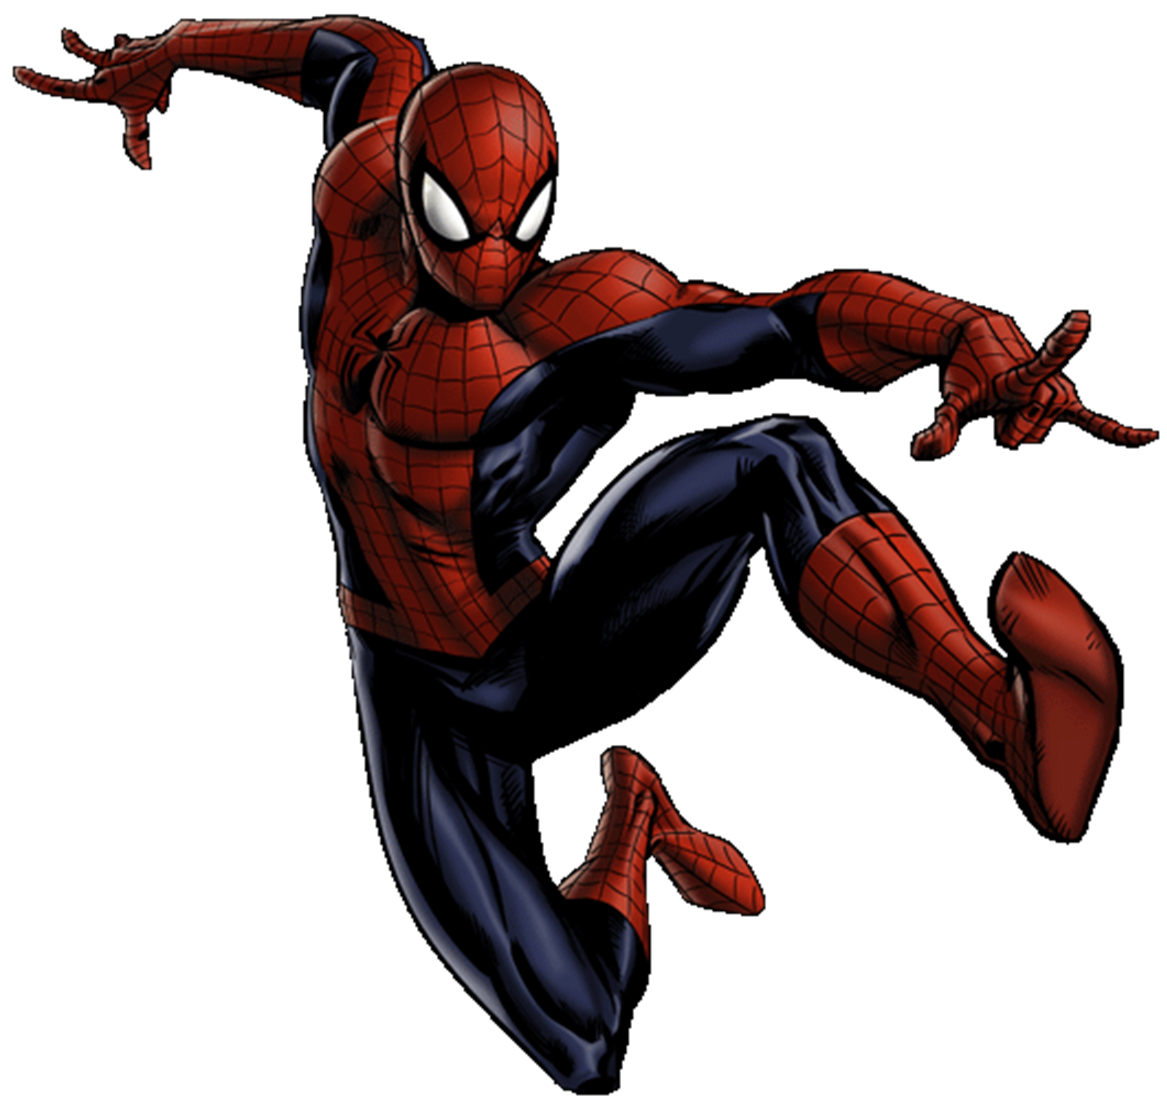 Spider-Man | Marvel: Avengers Alliance Tactics Wiki | Fandom powered by